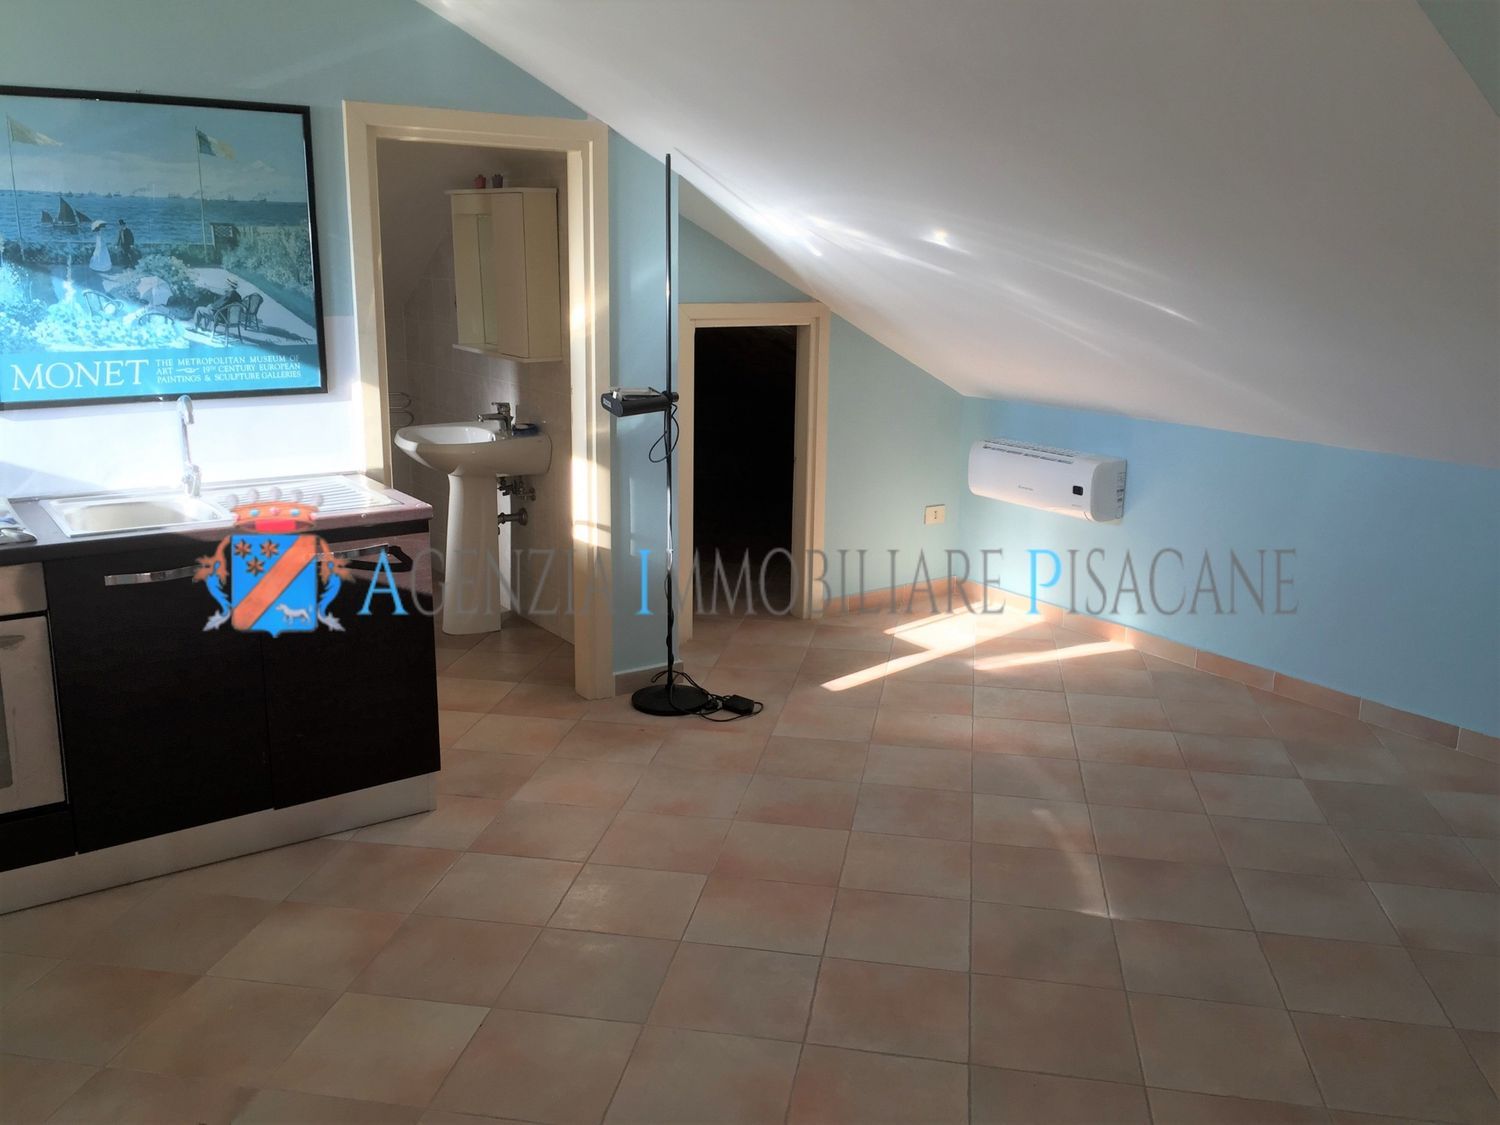  - Estate Agency & Architecture Pisacane